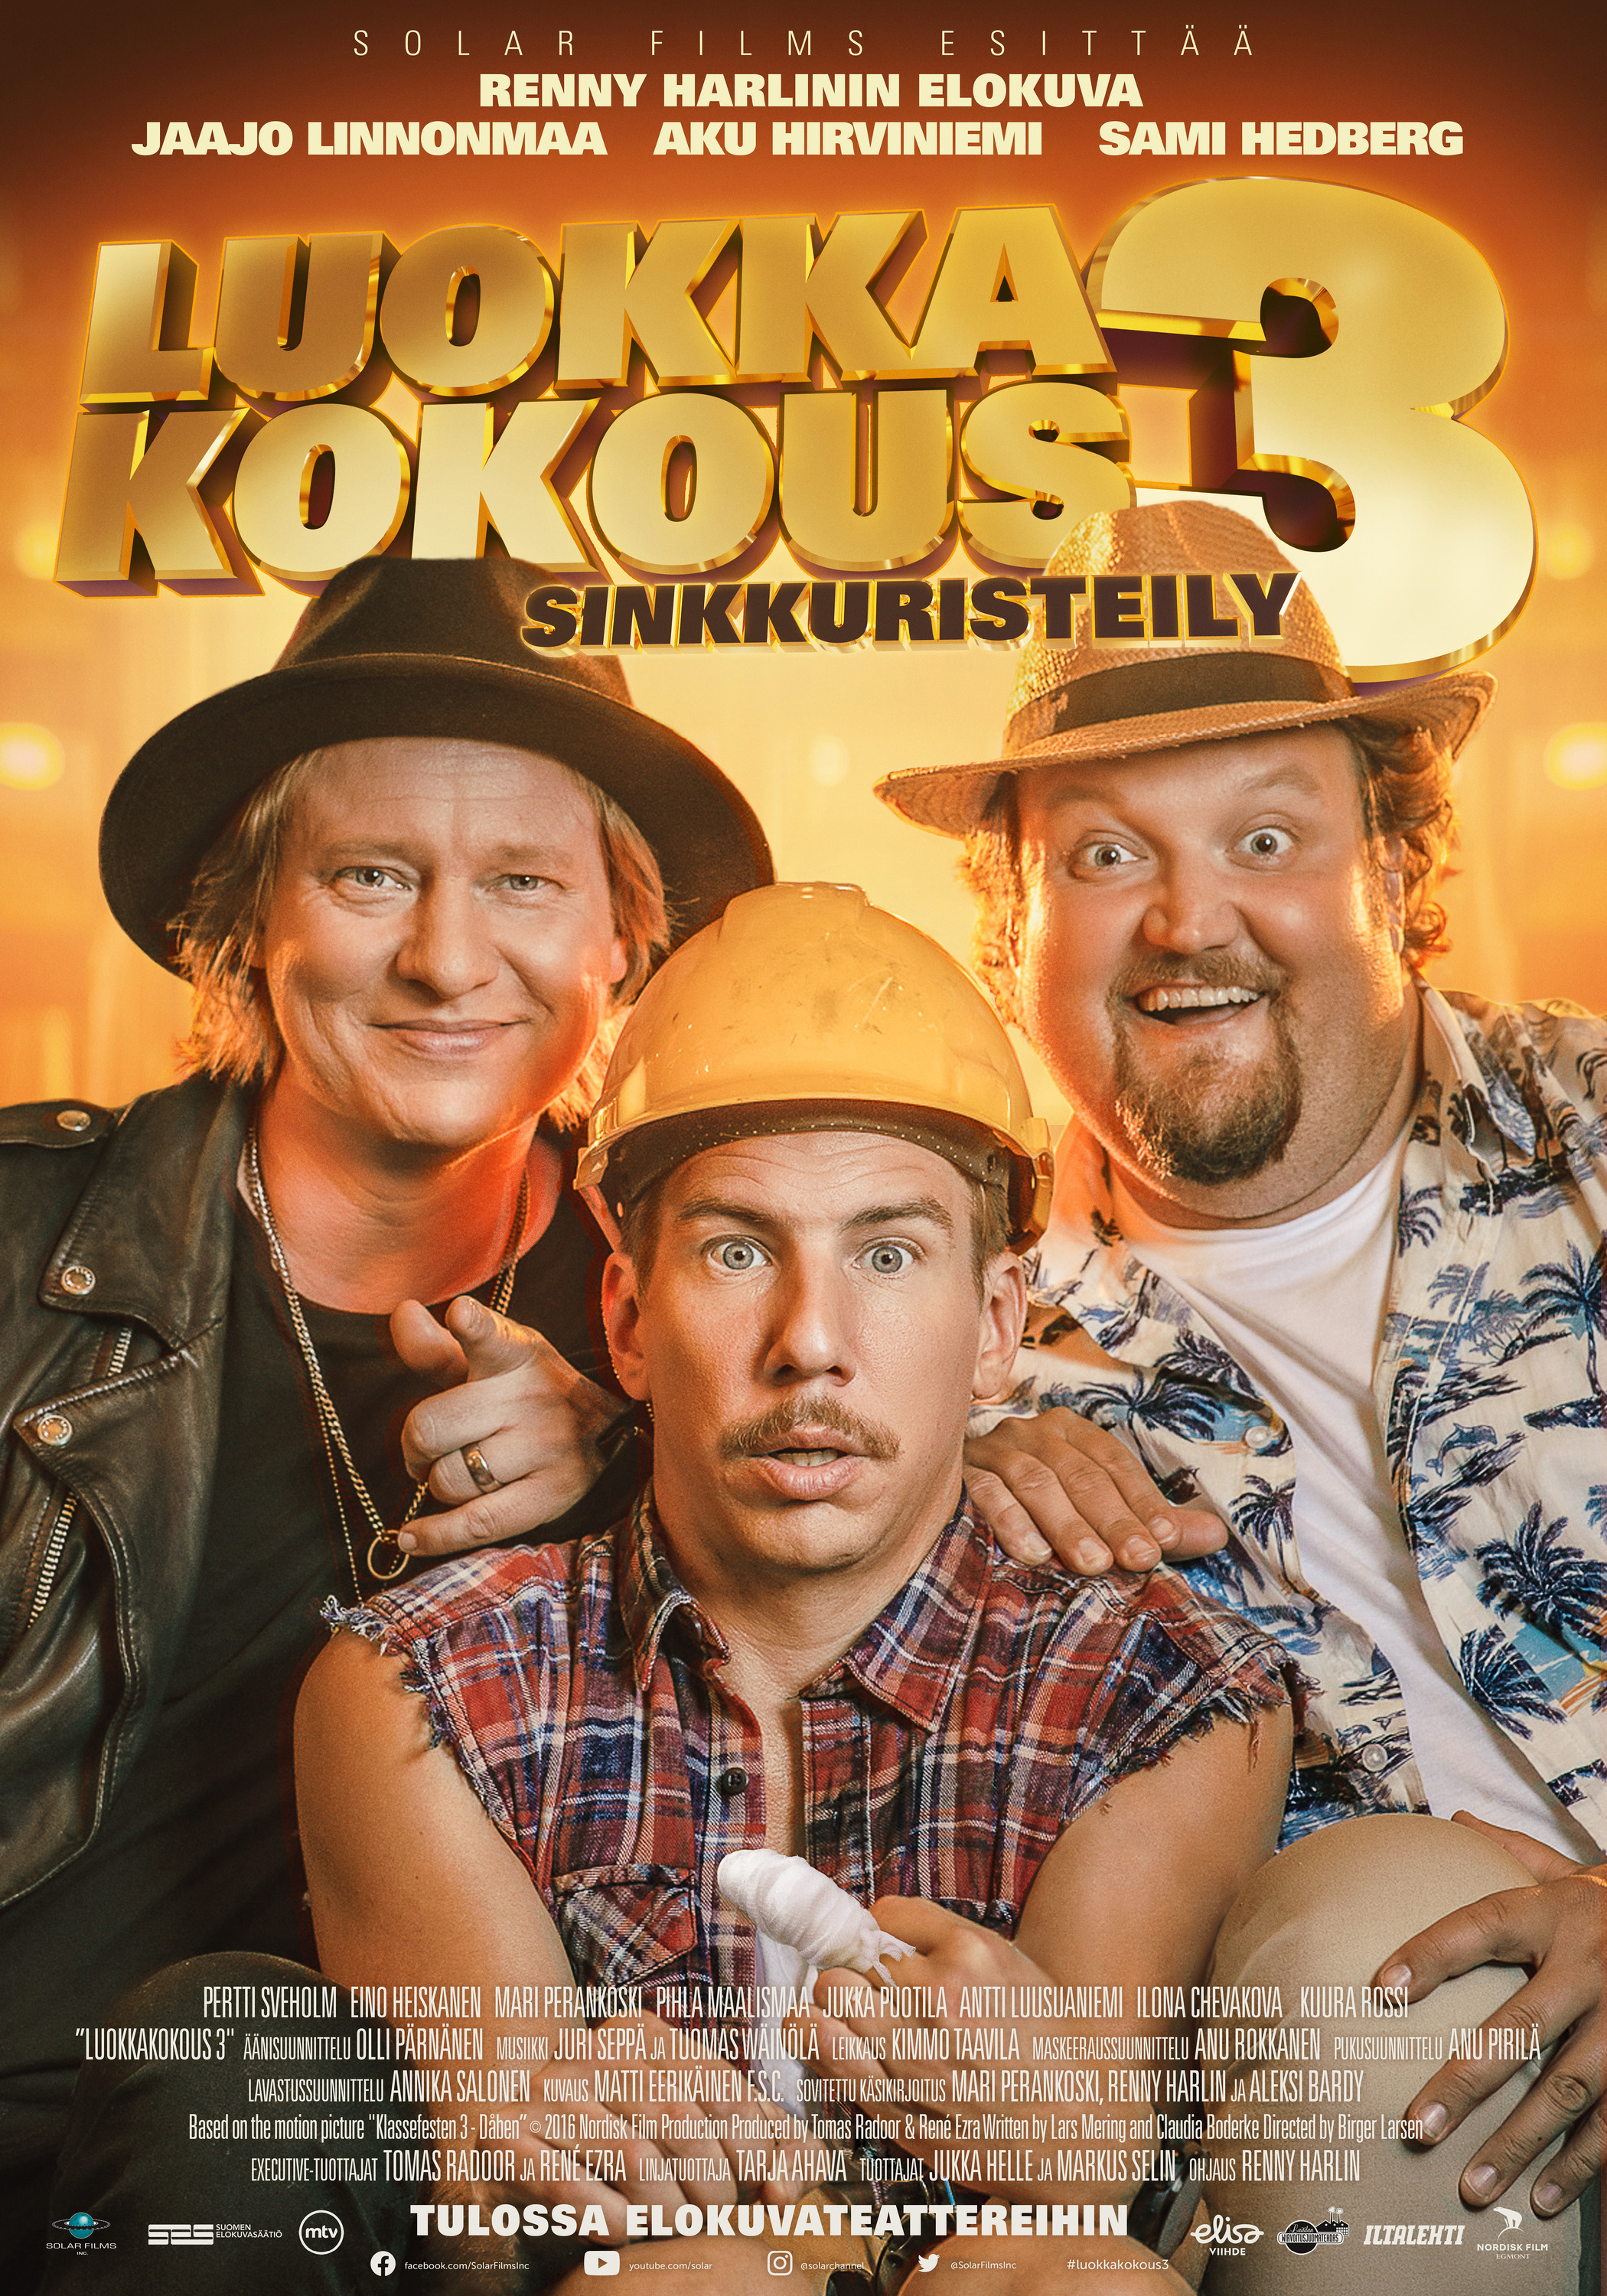 Mega Sized Movie Poster Image for Luokkakokous 3 